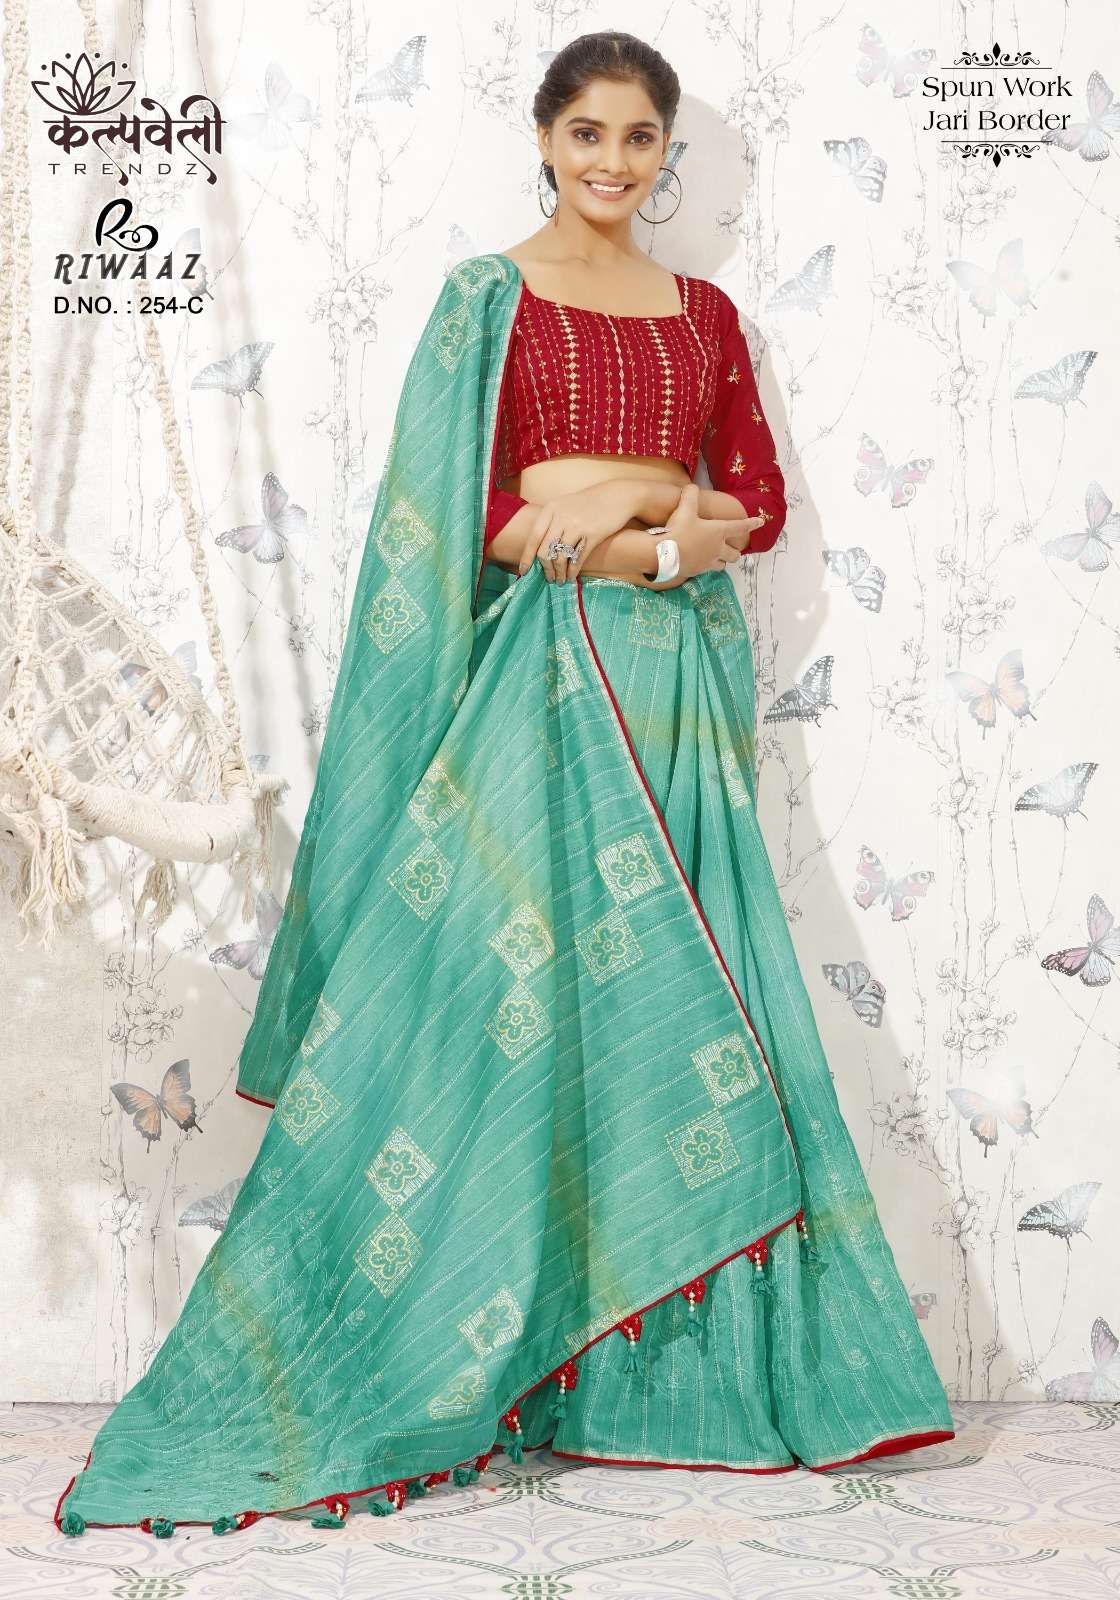 kalpavelly trendz riwaaz 254 fancy spun cotton saree supplier